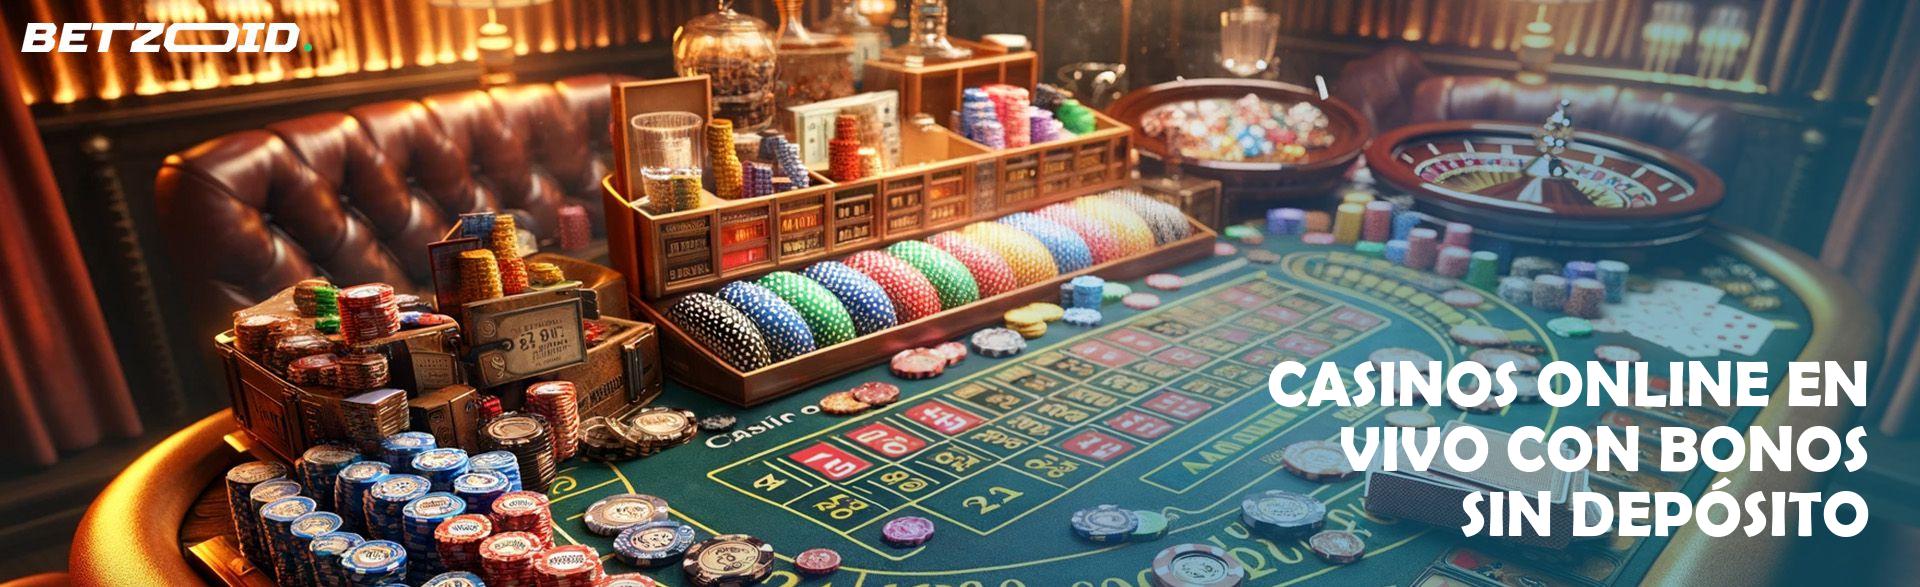 Casino con bonos sin deposito